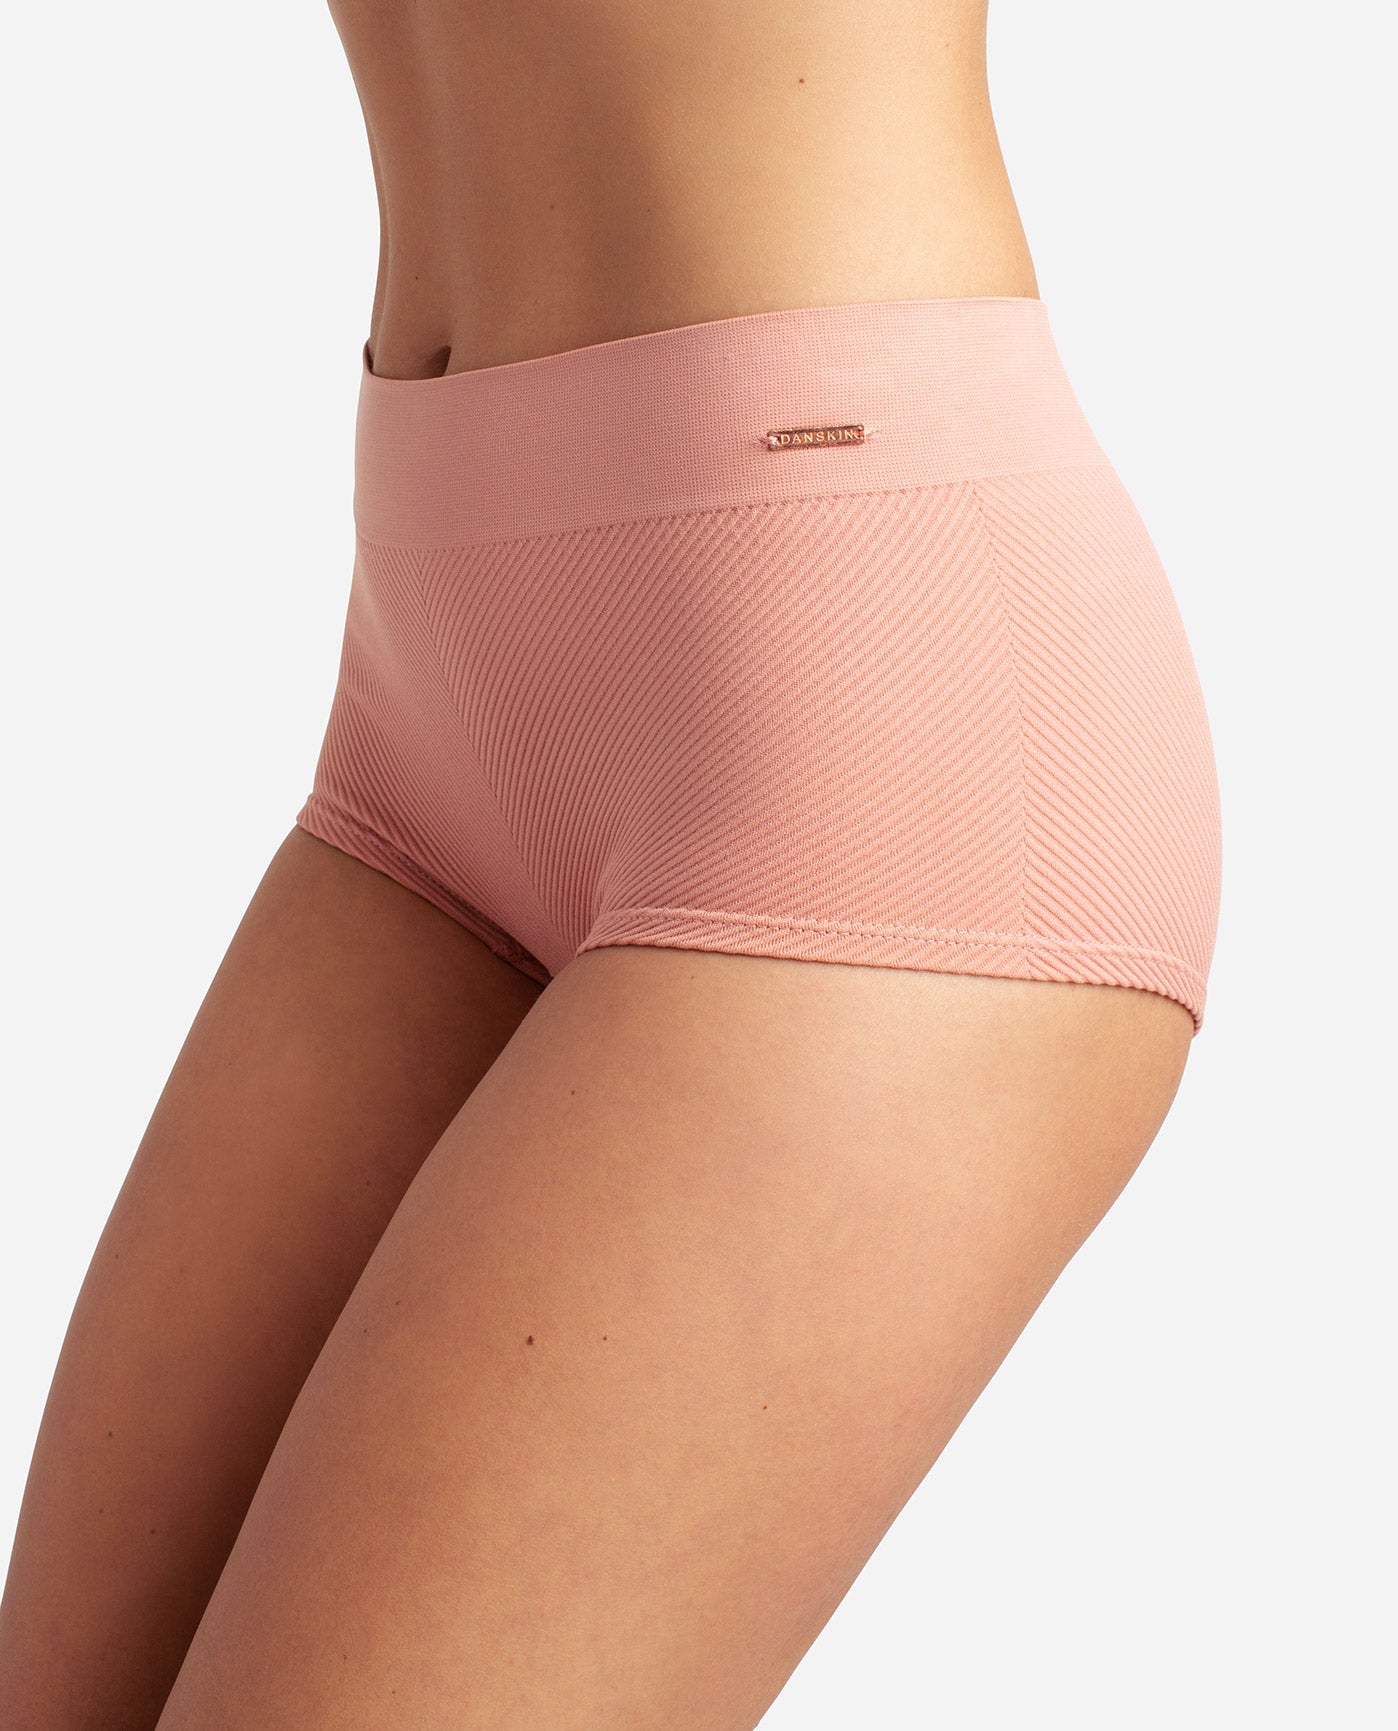 Danskin Brushed Microfiber Panties - 5-Pack, Boy Leg Cut - Save 64%